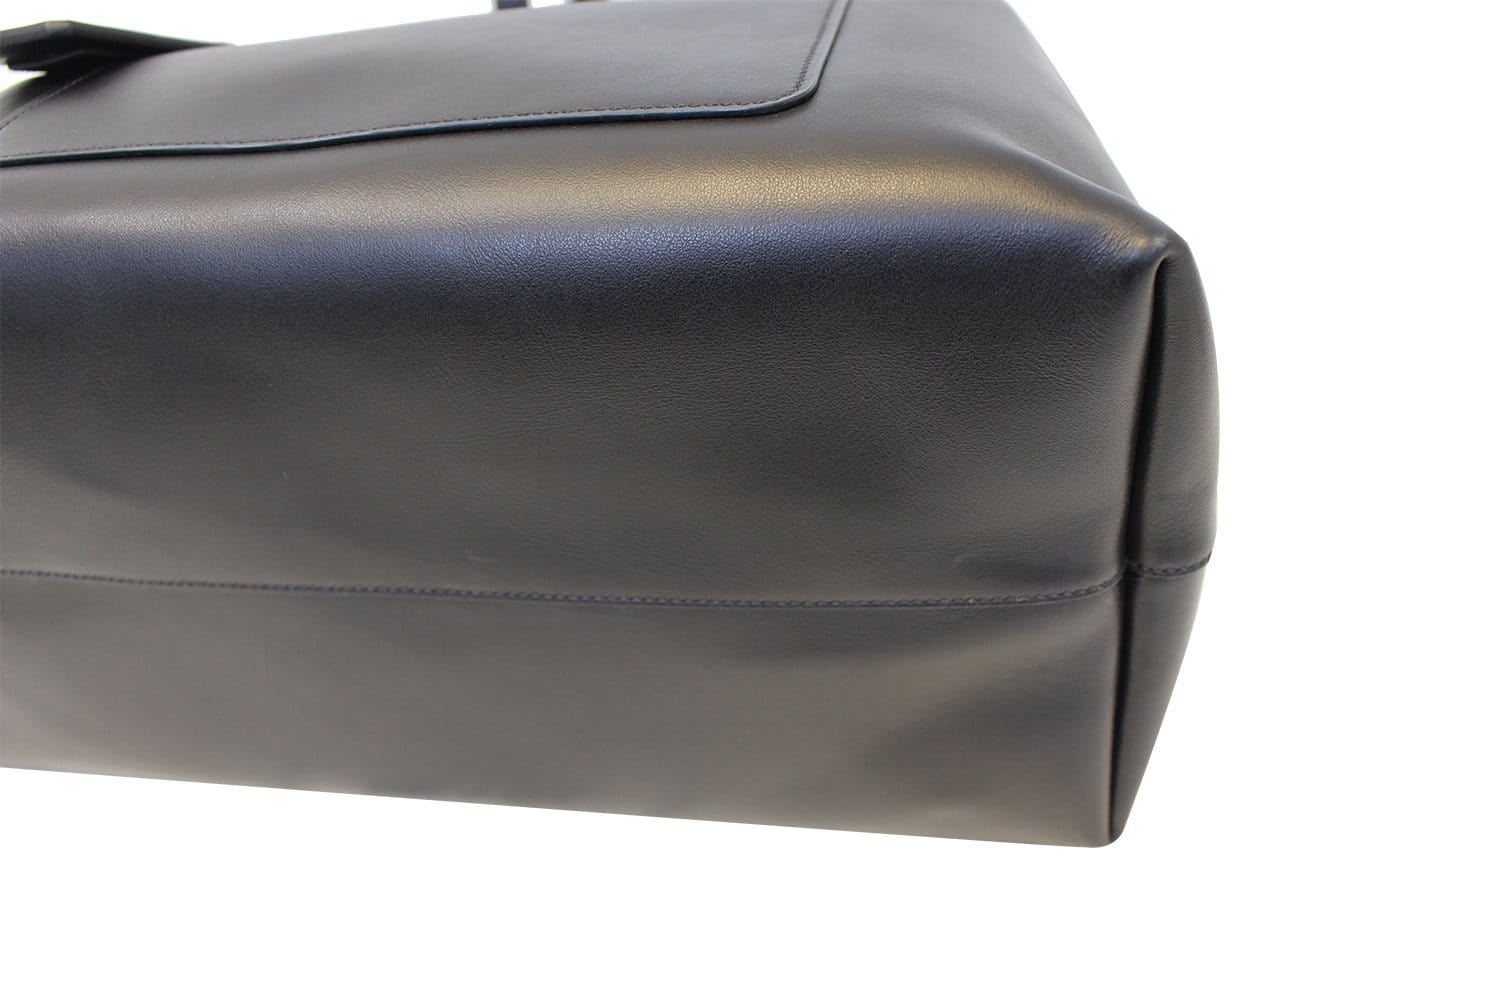 Large PRADA City Calf Double Bag in Caramel, EXCELLENT CONDITION +